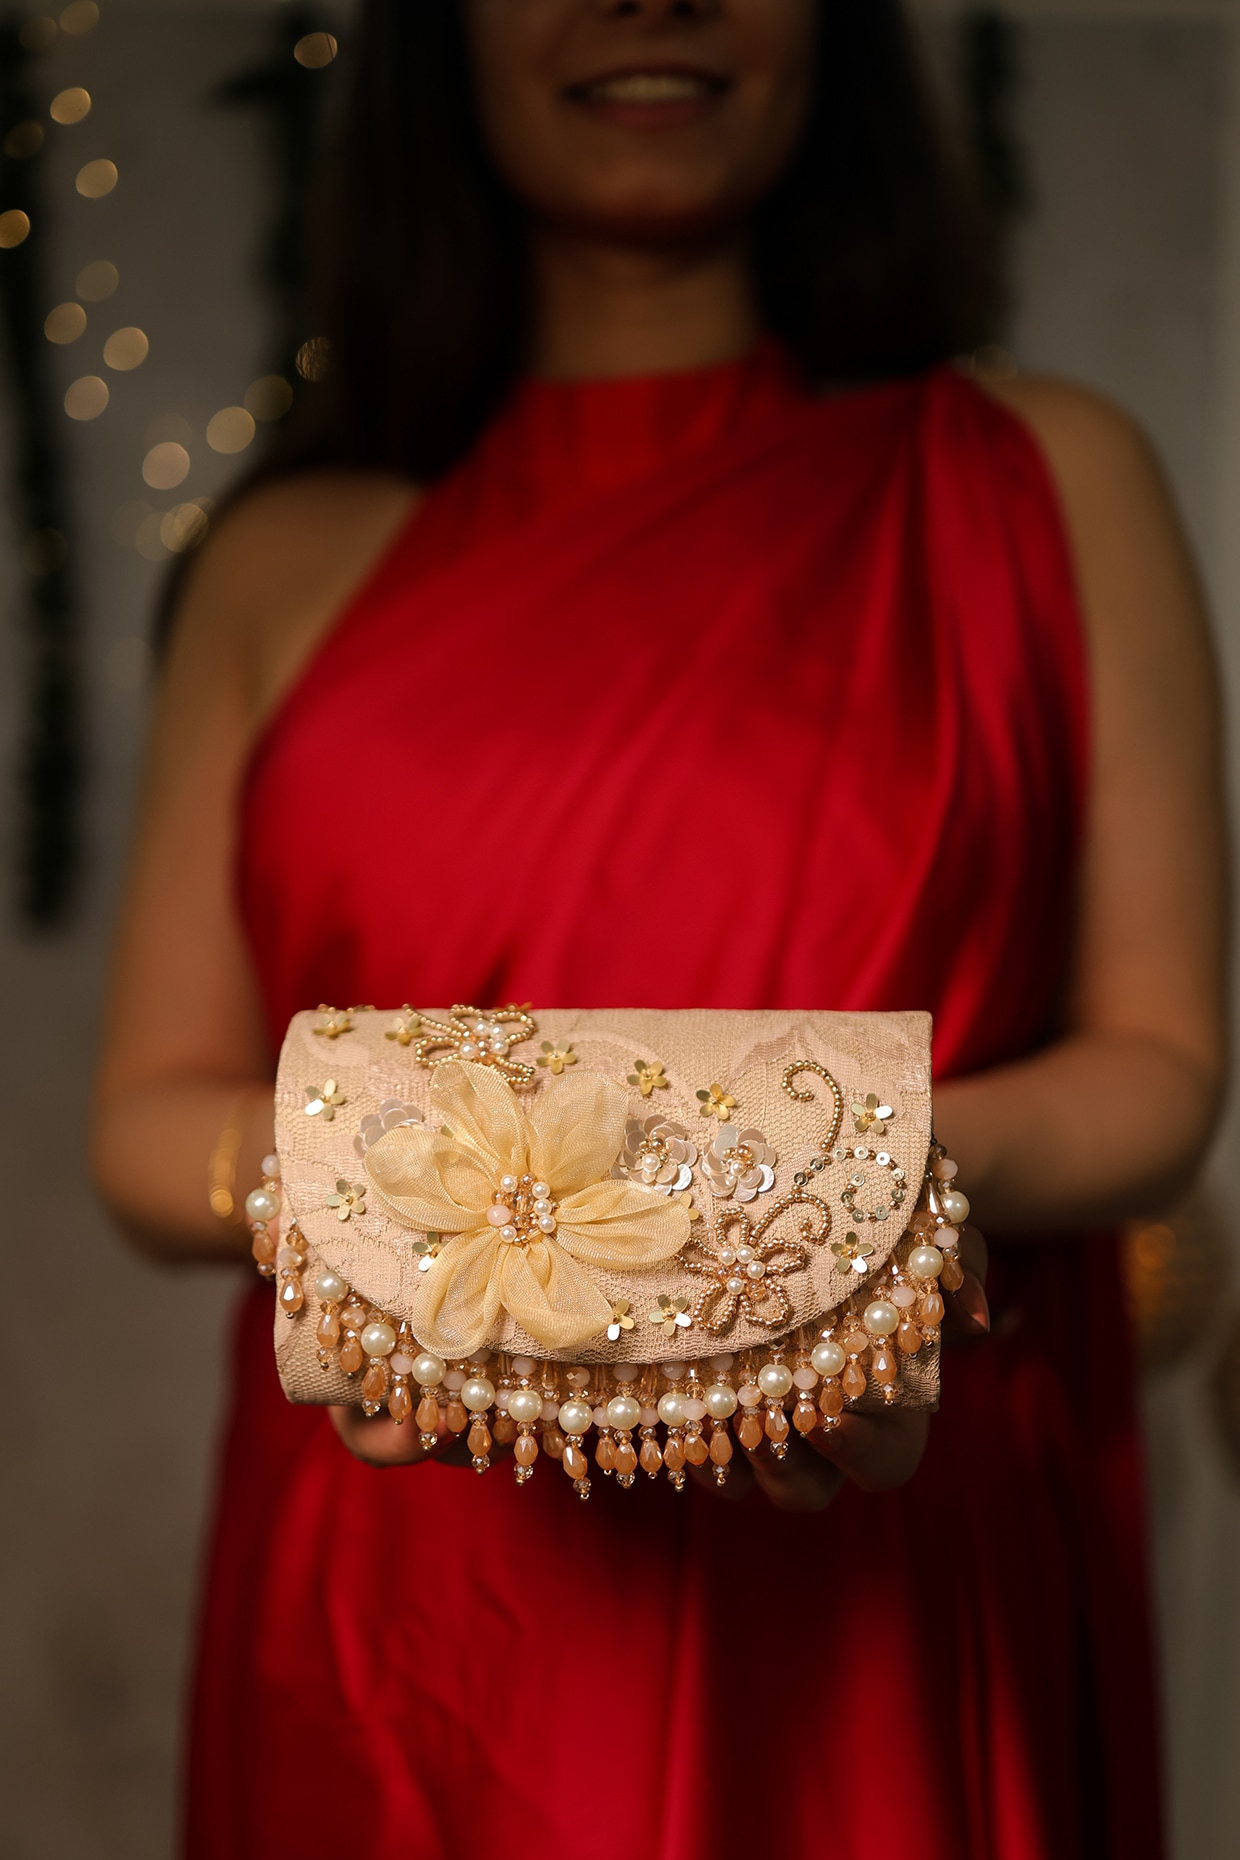 Wedding Clutch bag Bridal Evening Bag clutch ladies purse sling handbags  with crystal studded embellishments evening